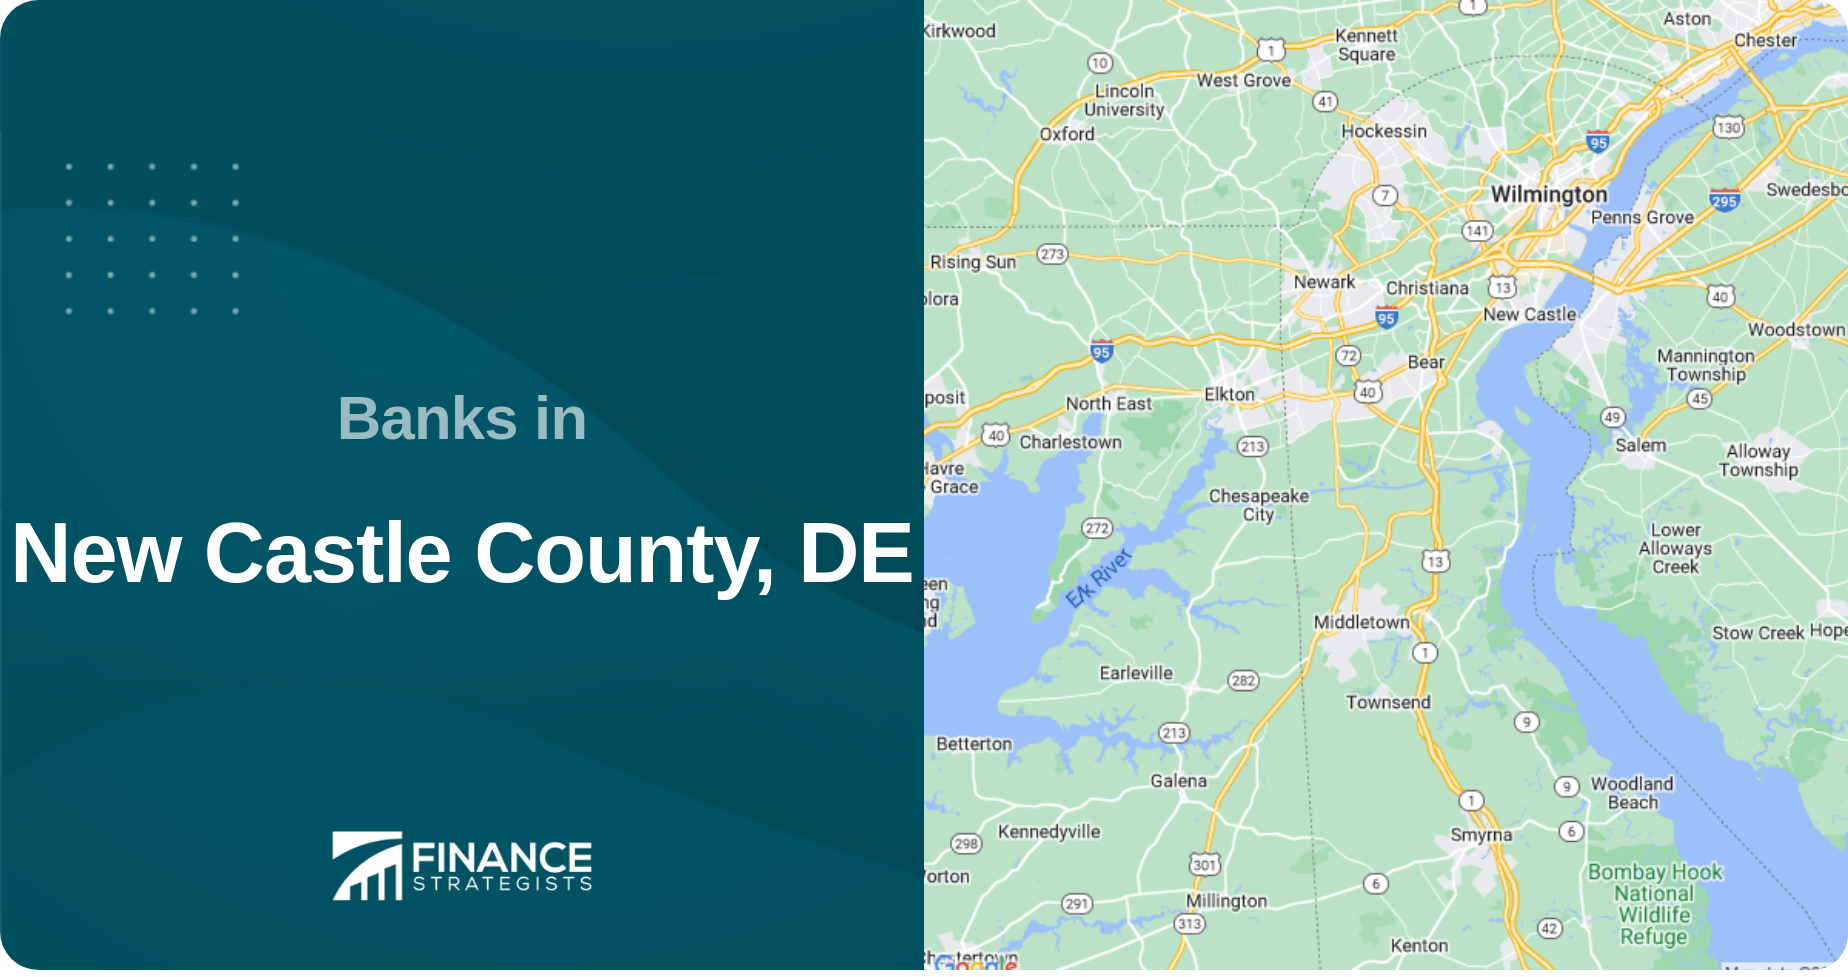 Banks in New Castle County, DE